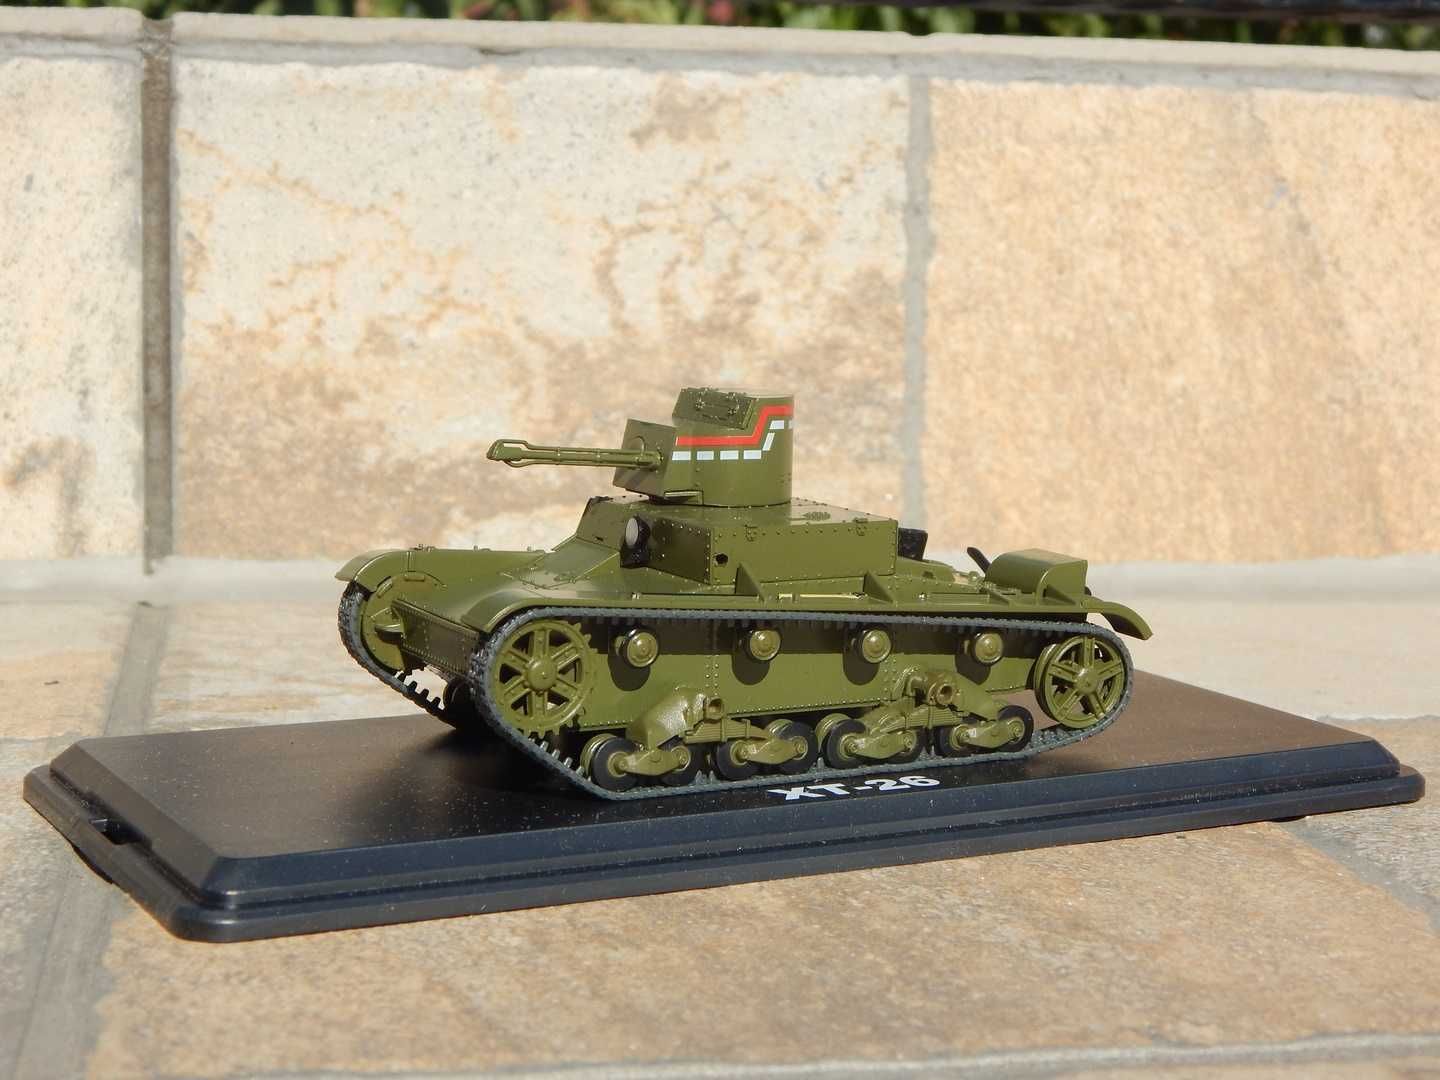 Macheta tanc usor sovietic HT-26 (T-26) aruncator flacari scara 1:43